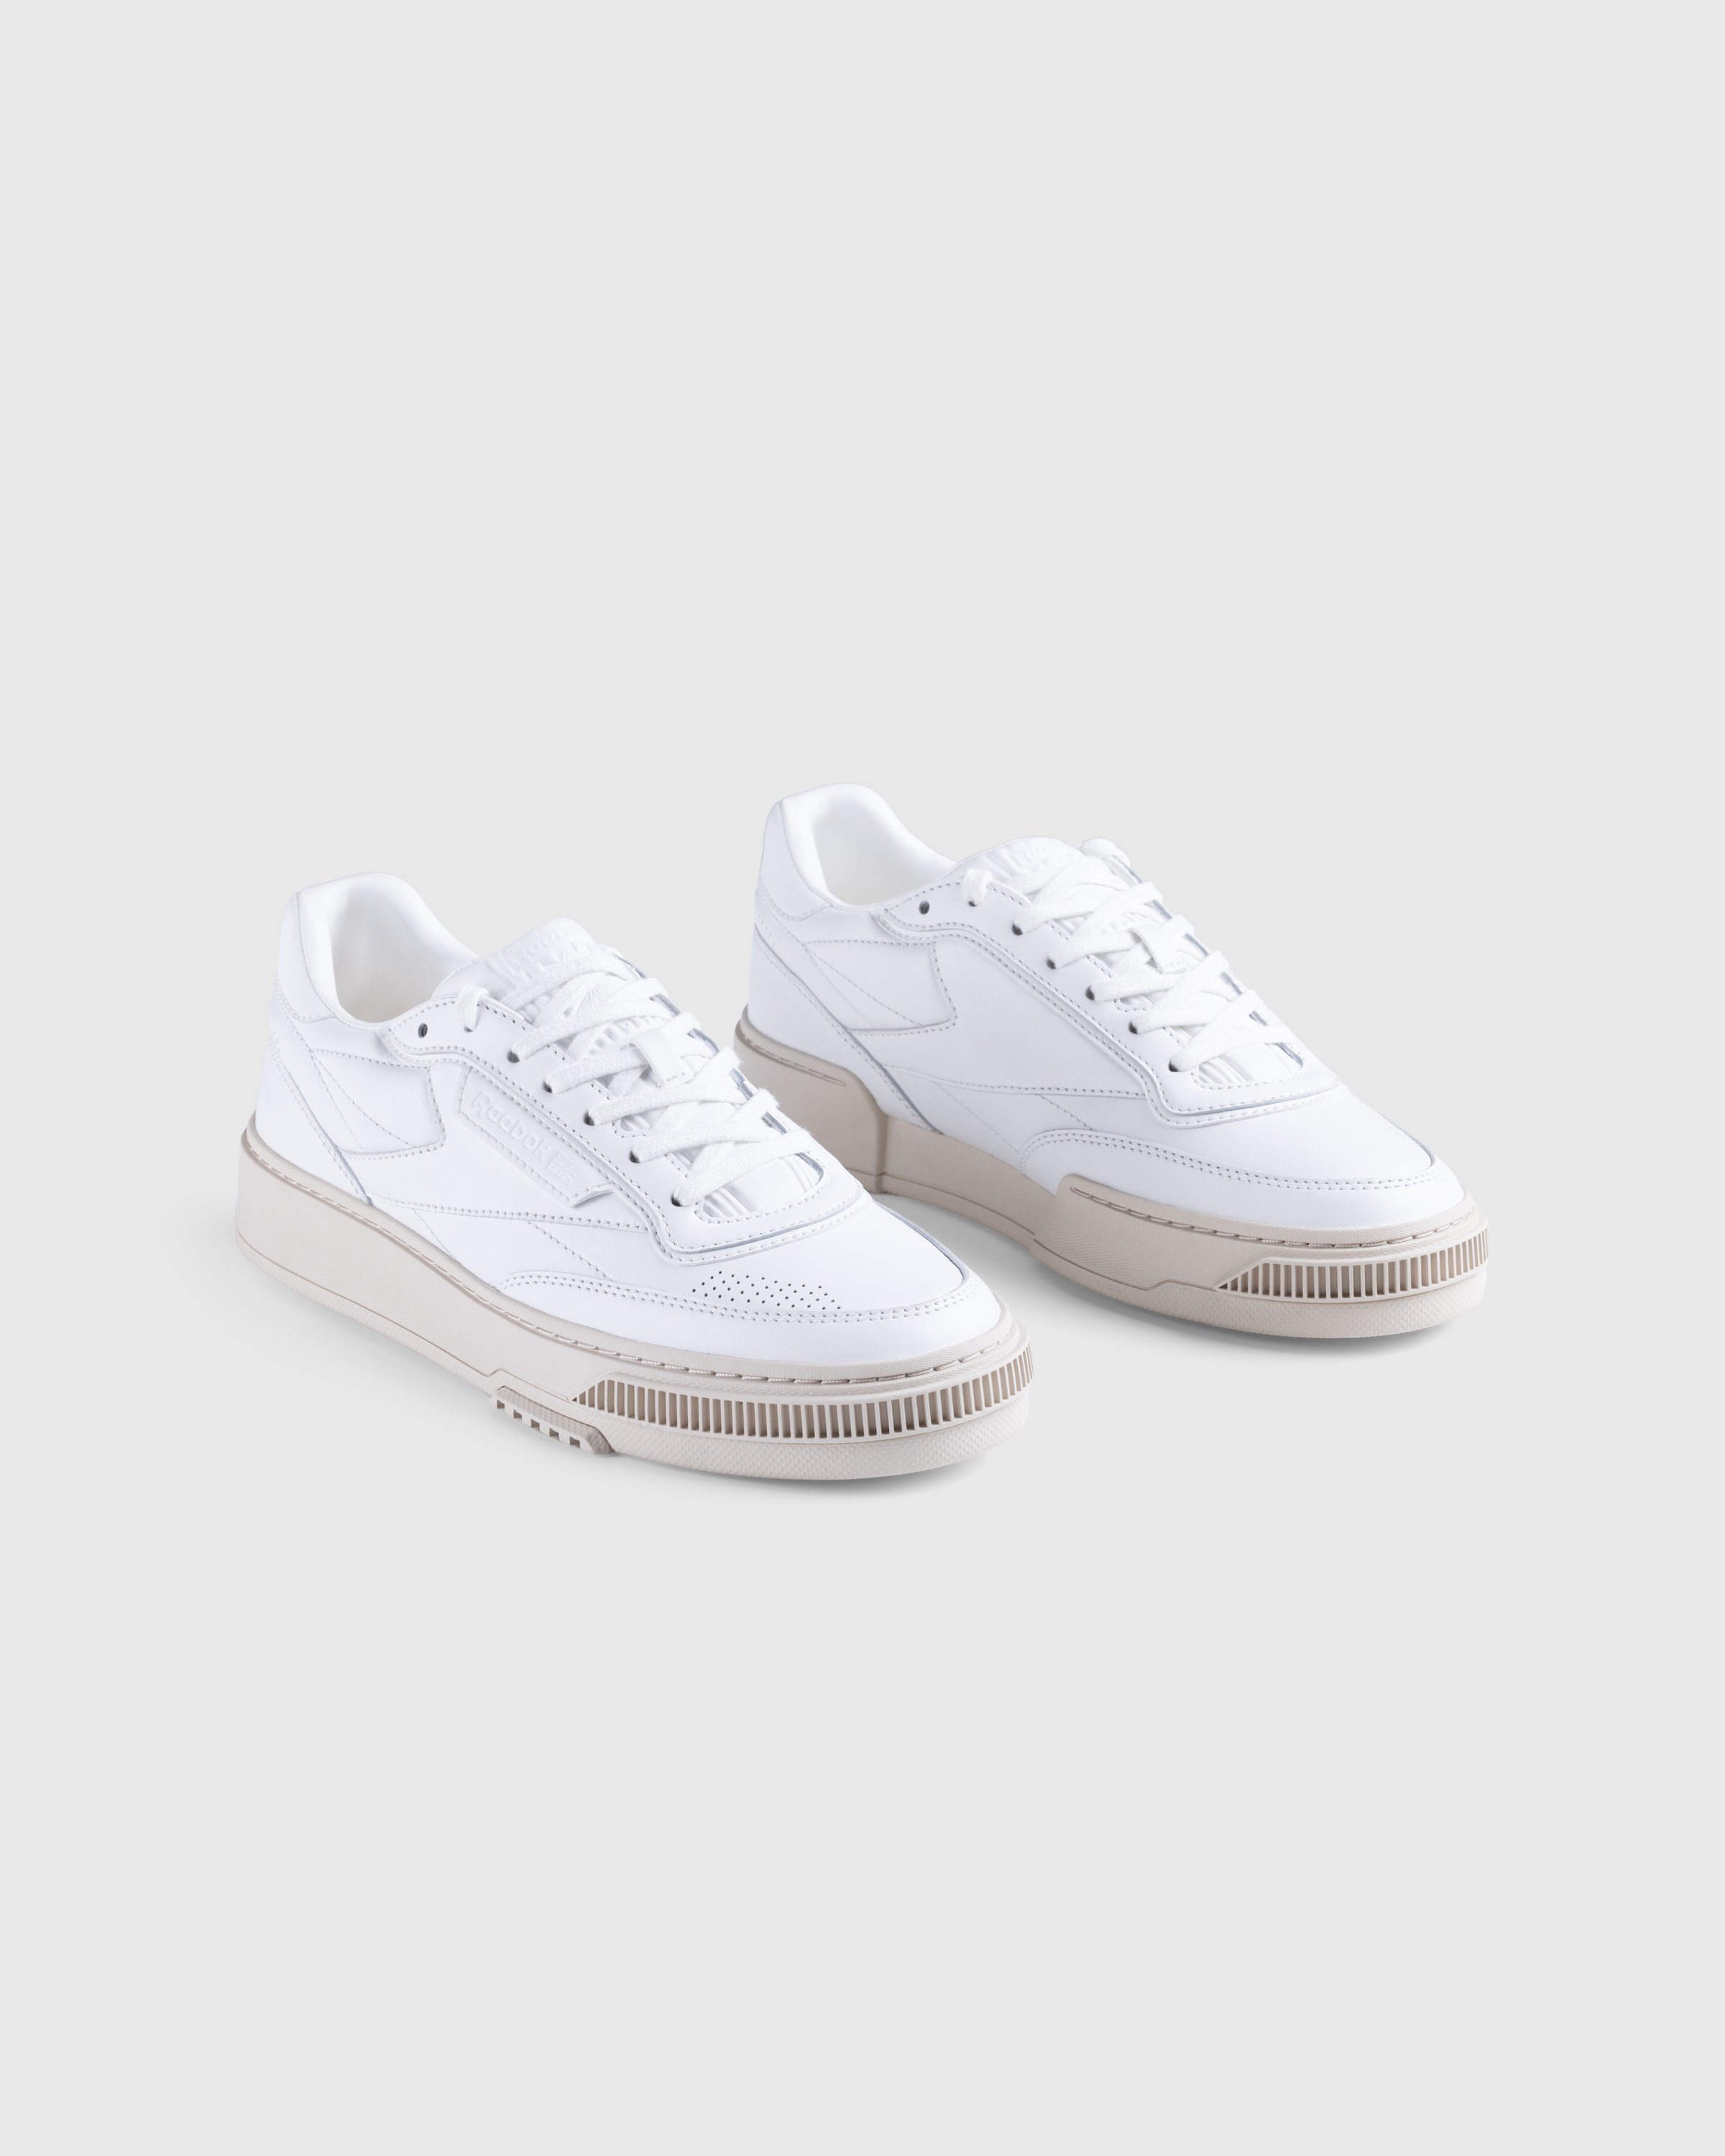 Reebok LTD - CLUB C LTD White (Luxe Leather) - Footwear - White - Image 3